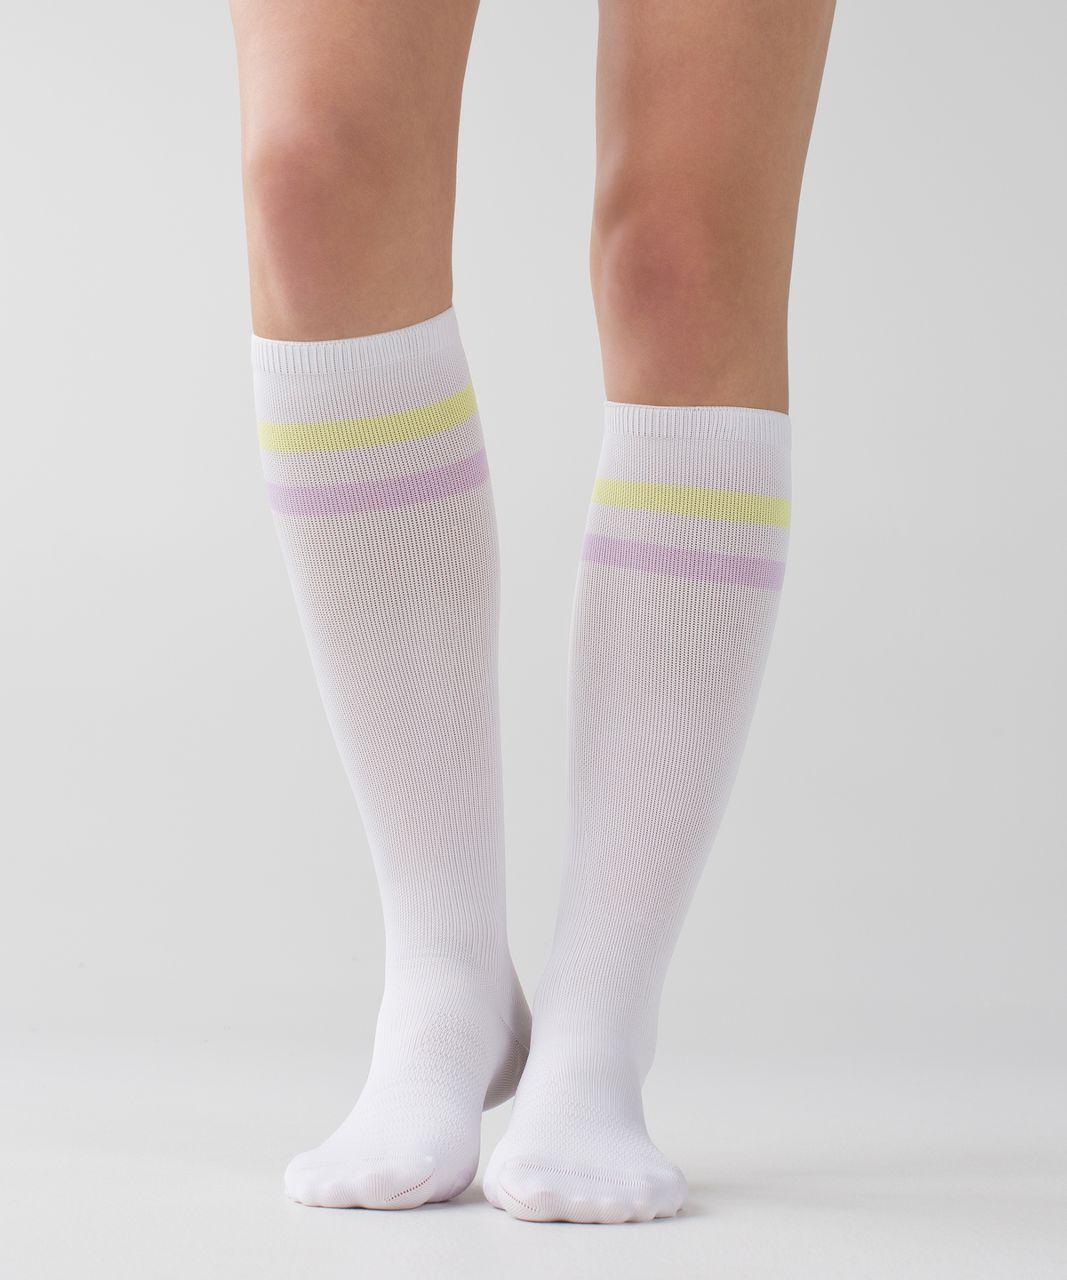 Lululemon Women's Keep It Tight Sock - Varsity Stripe White Clarity Yellow Pretty Purple